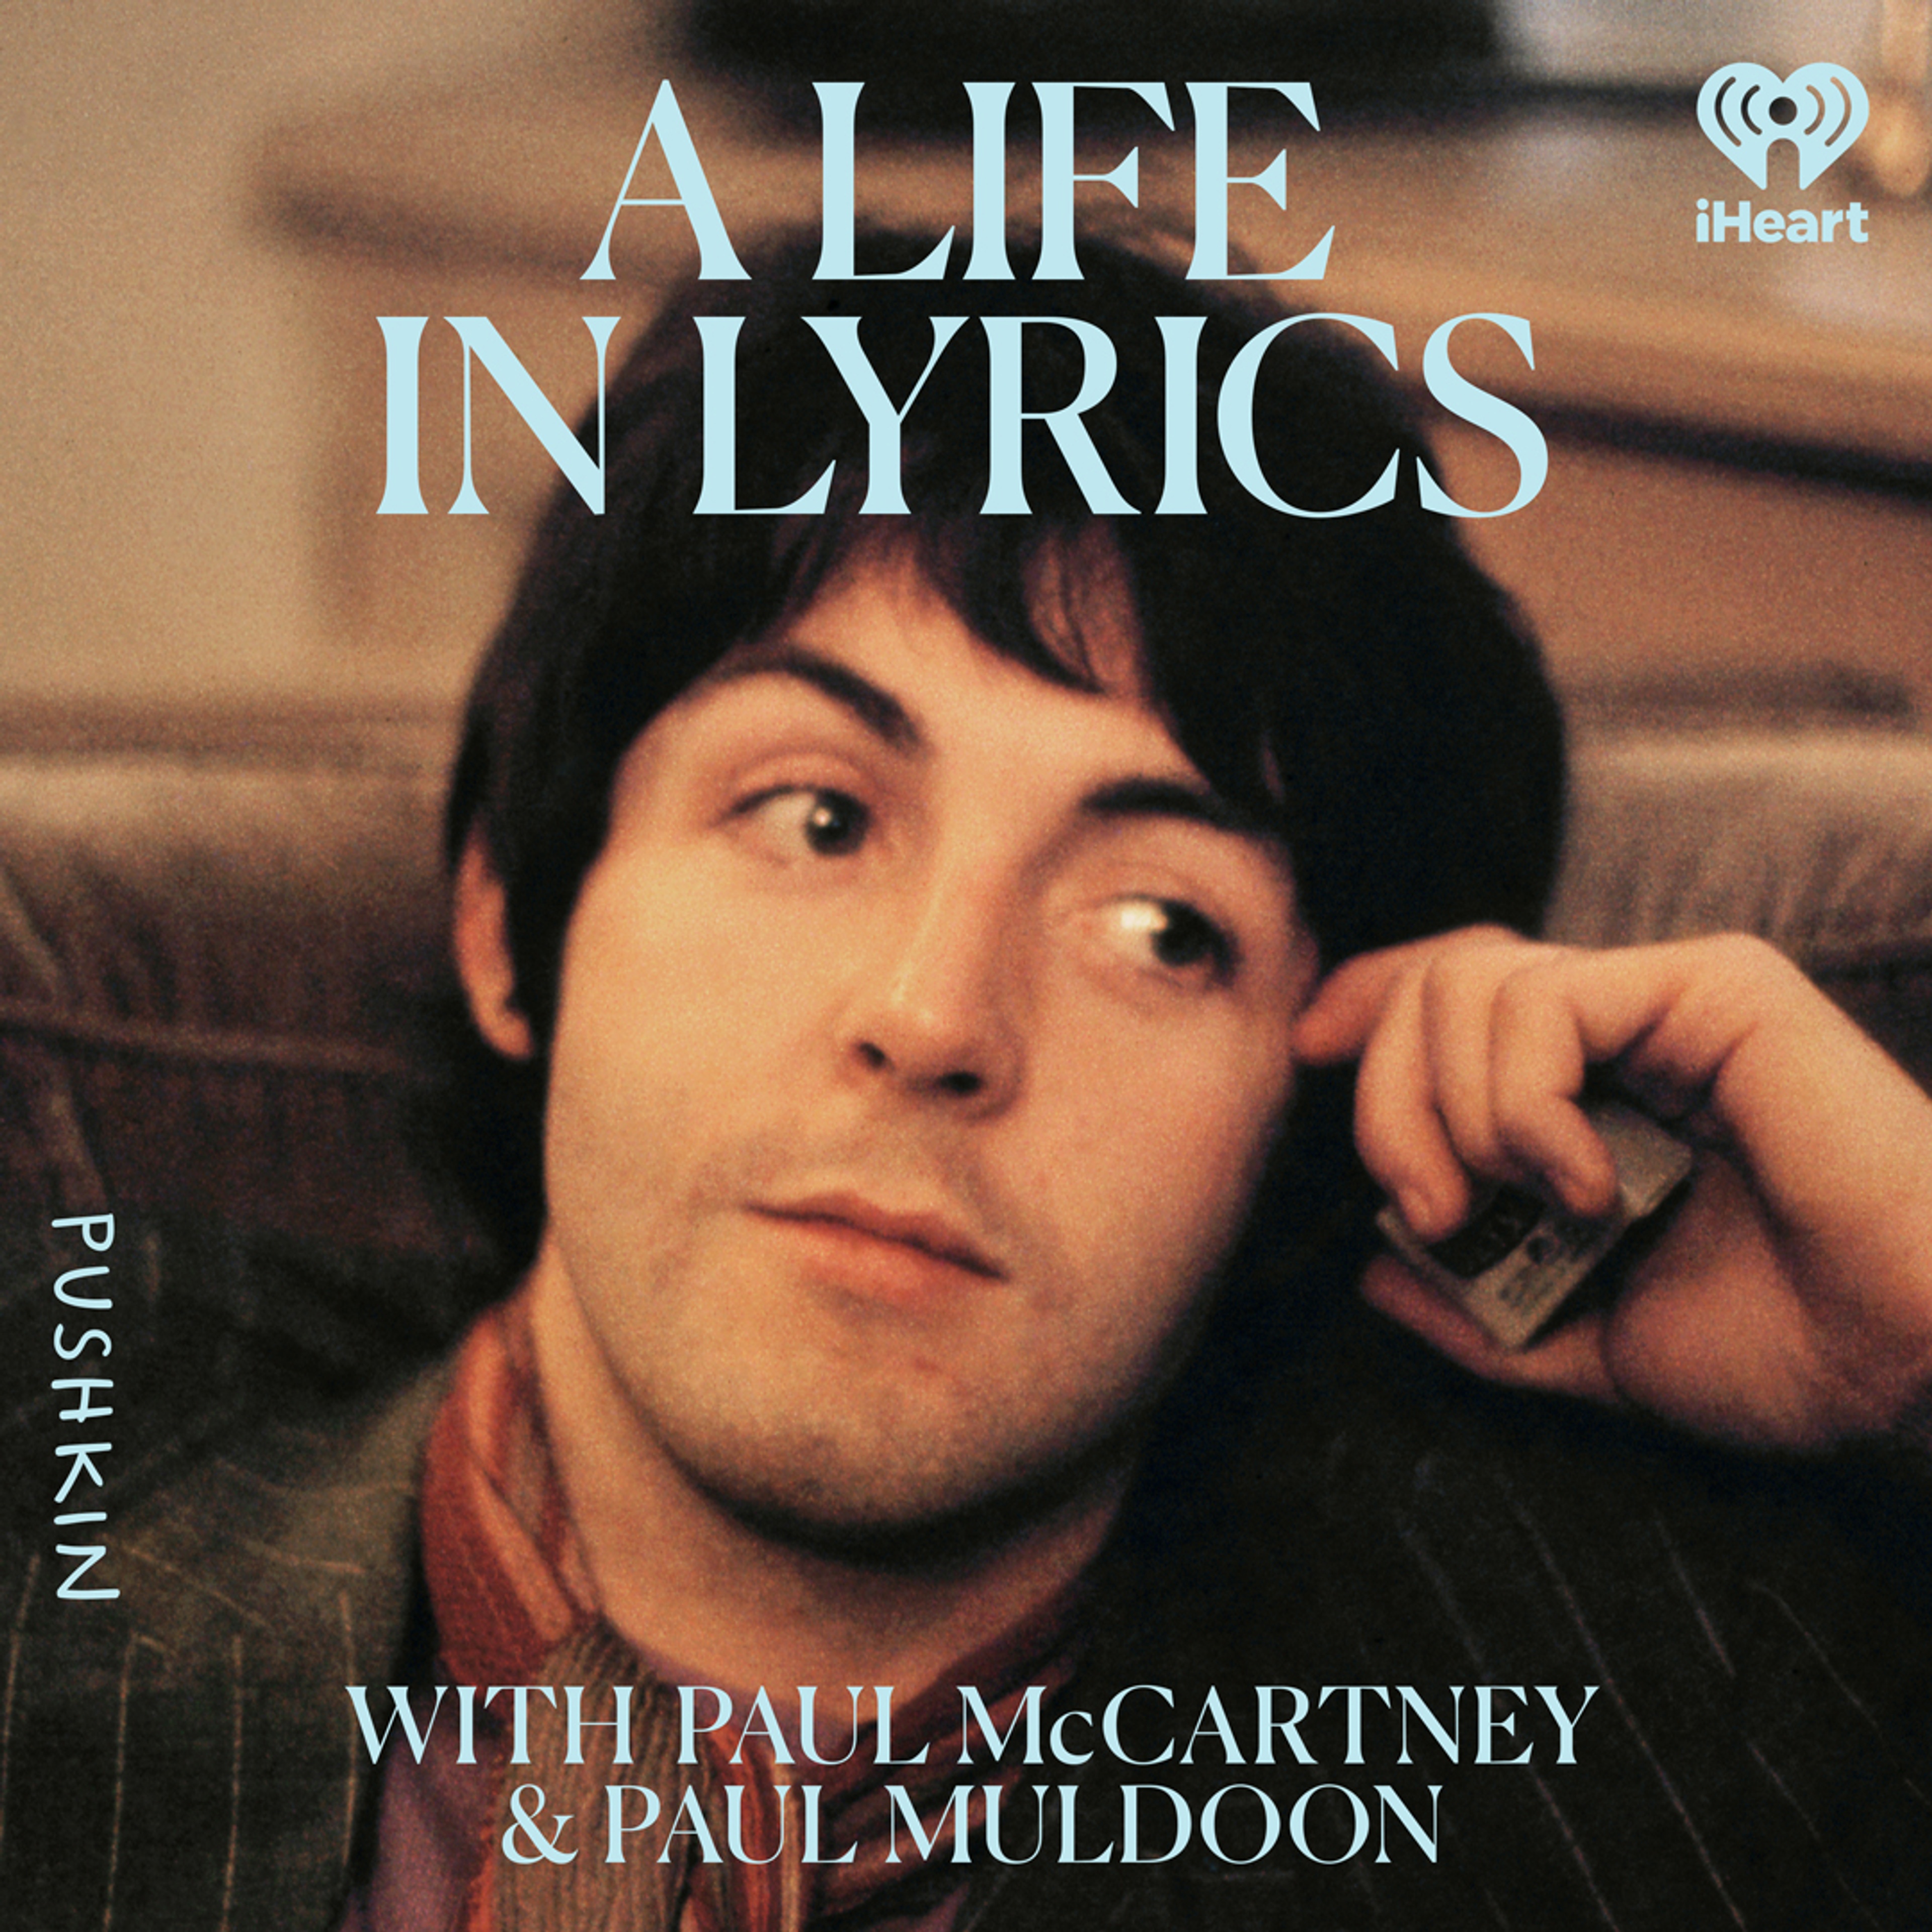 McCartney 'A Life In Lyrics' podcast artwork. Photo by Linda McCartney